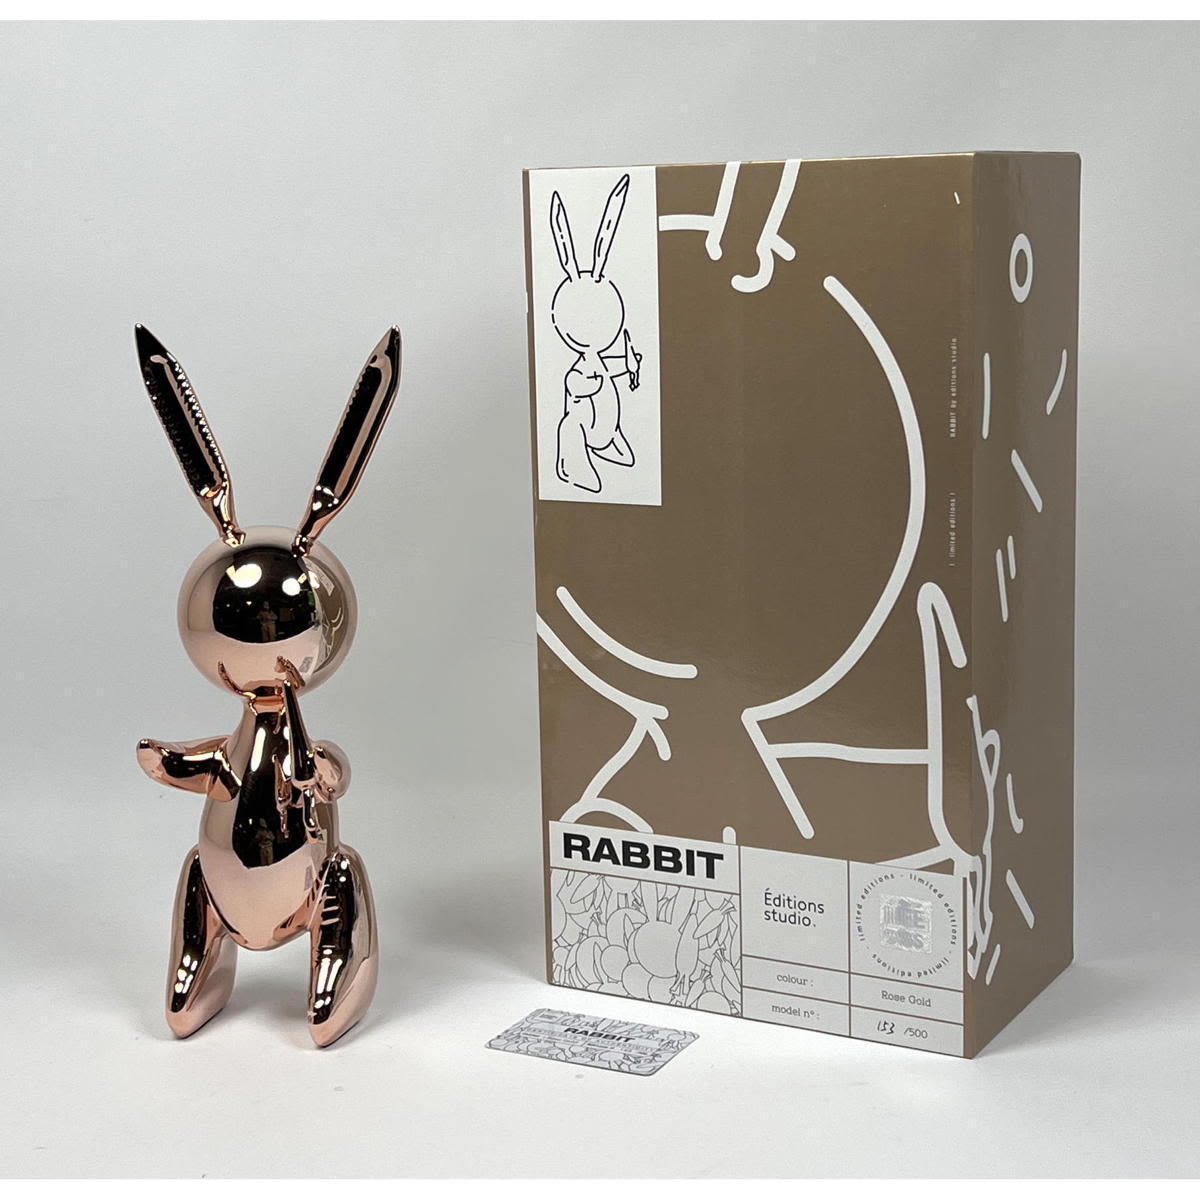 Edition studio rose gold rabbit